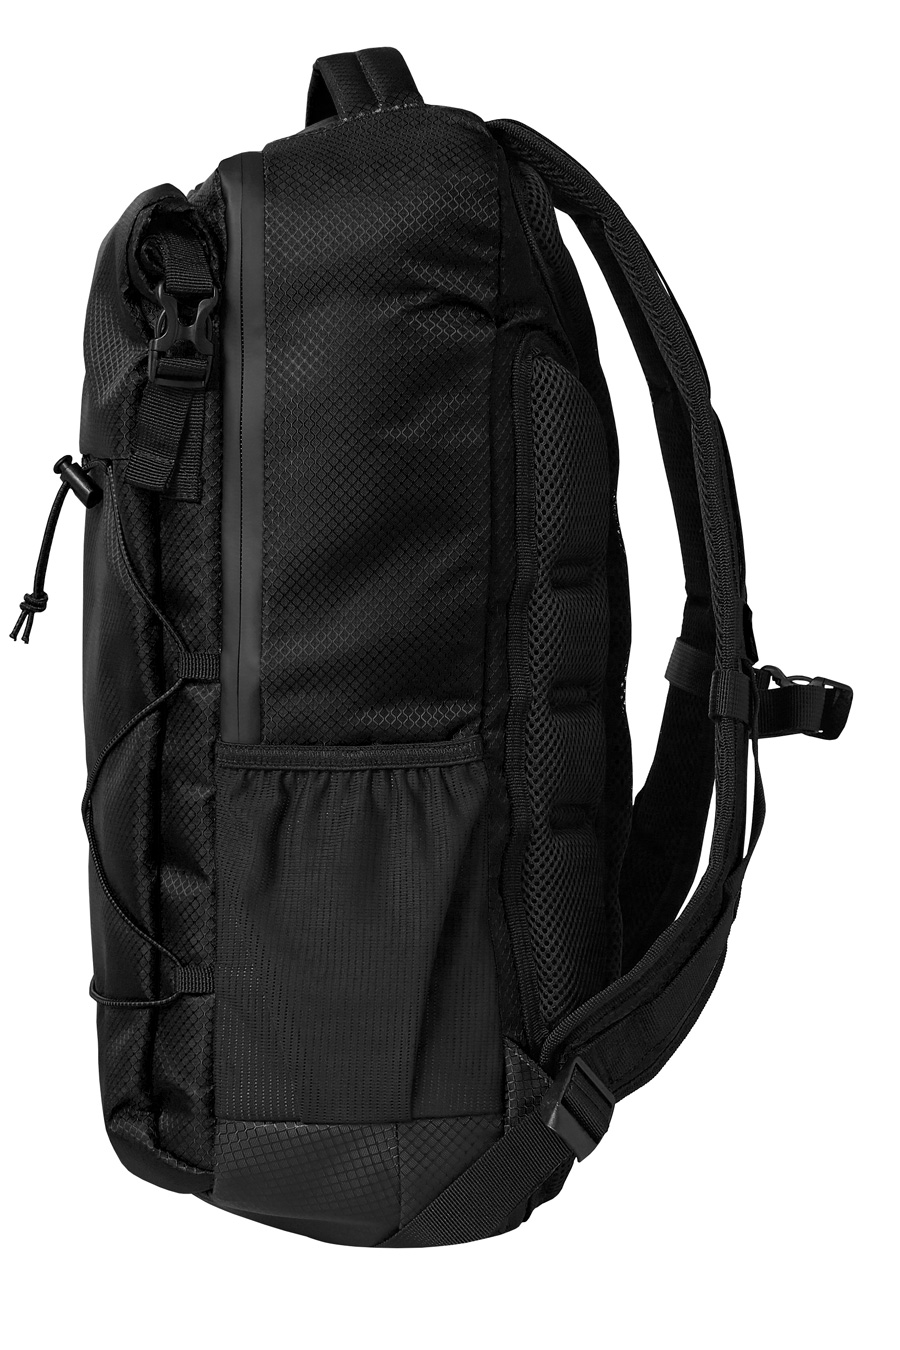 Backpack CAT 84438-01